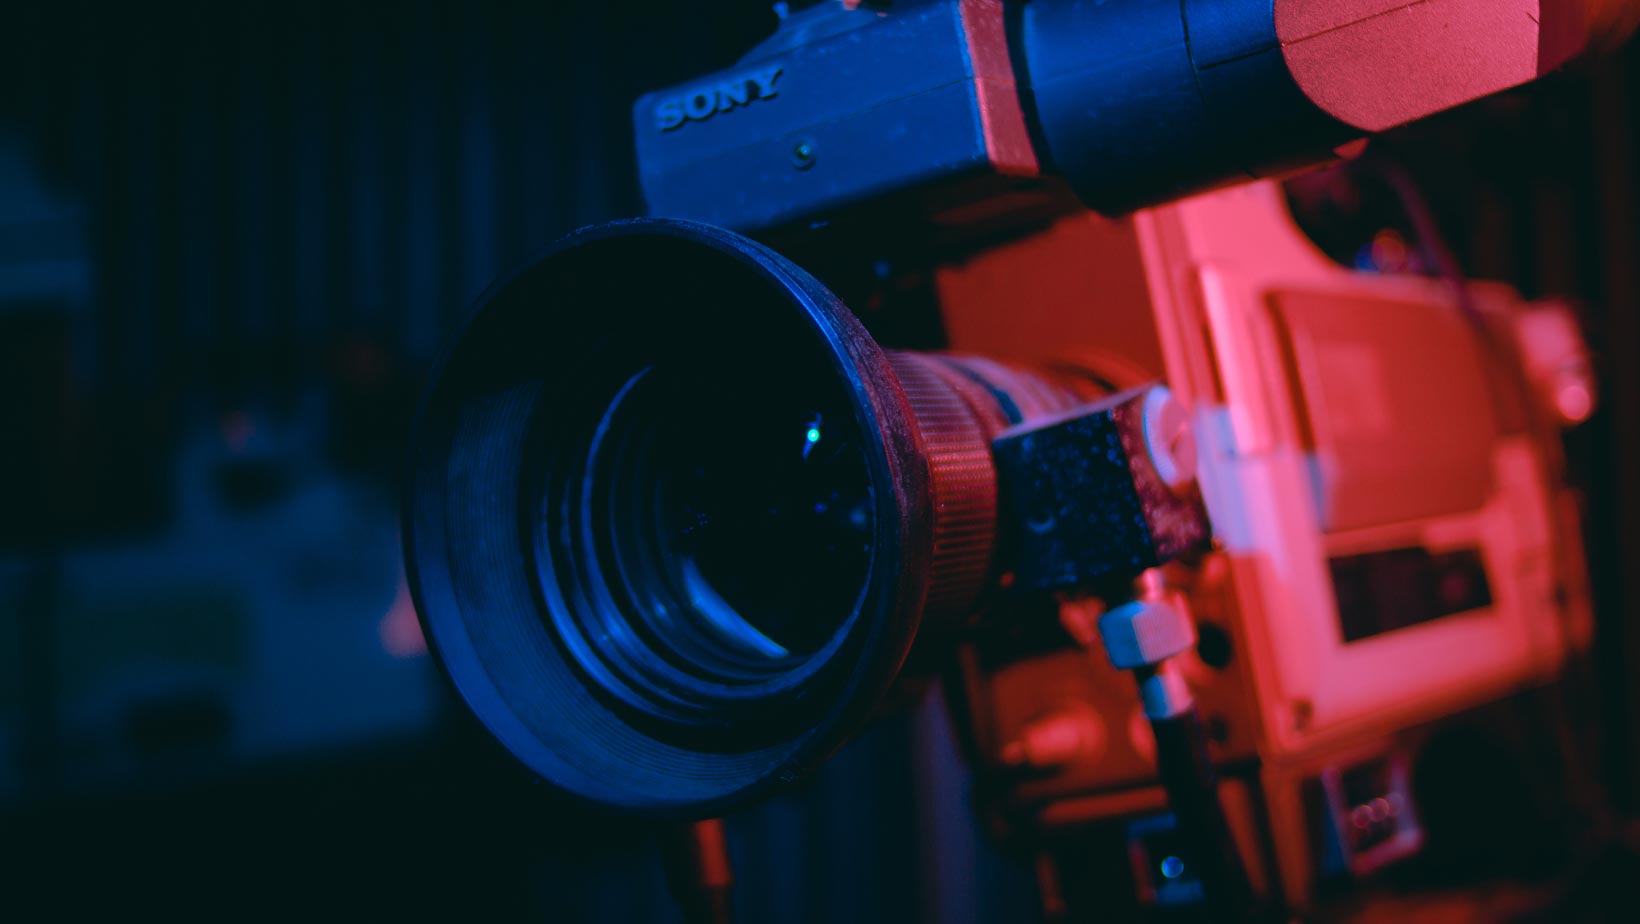 Video camera in the dark